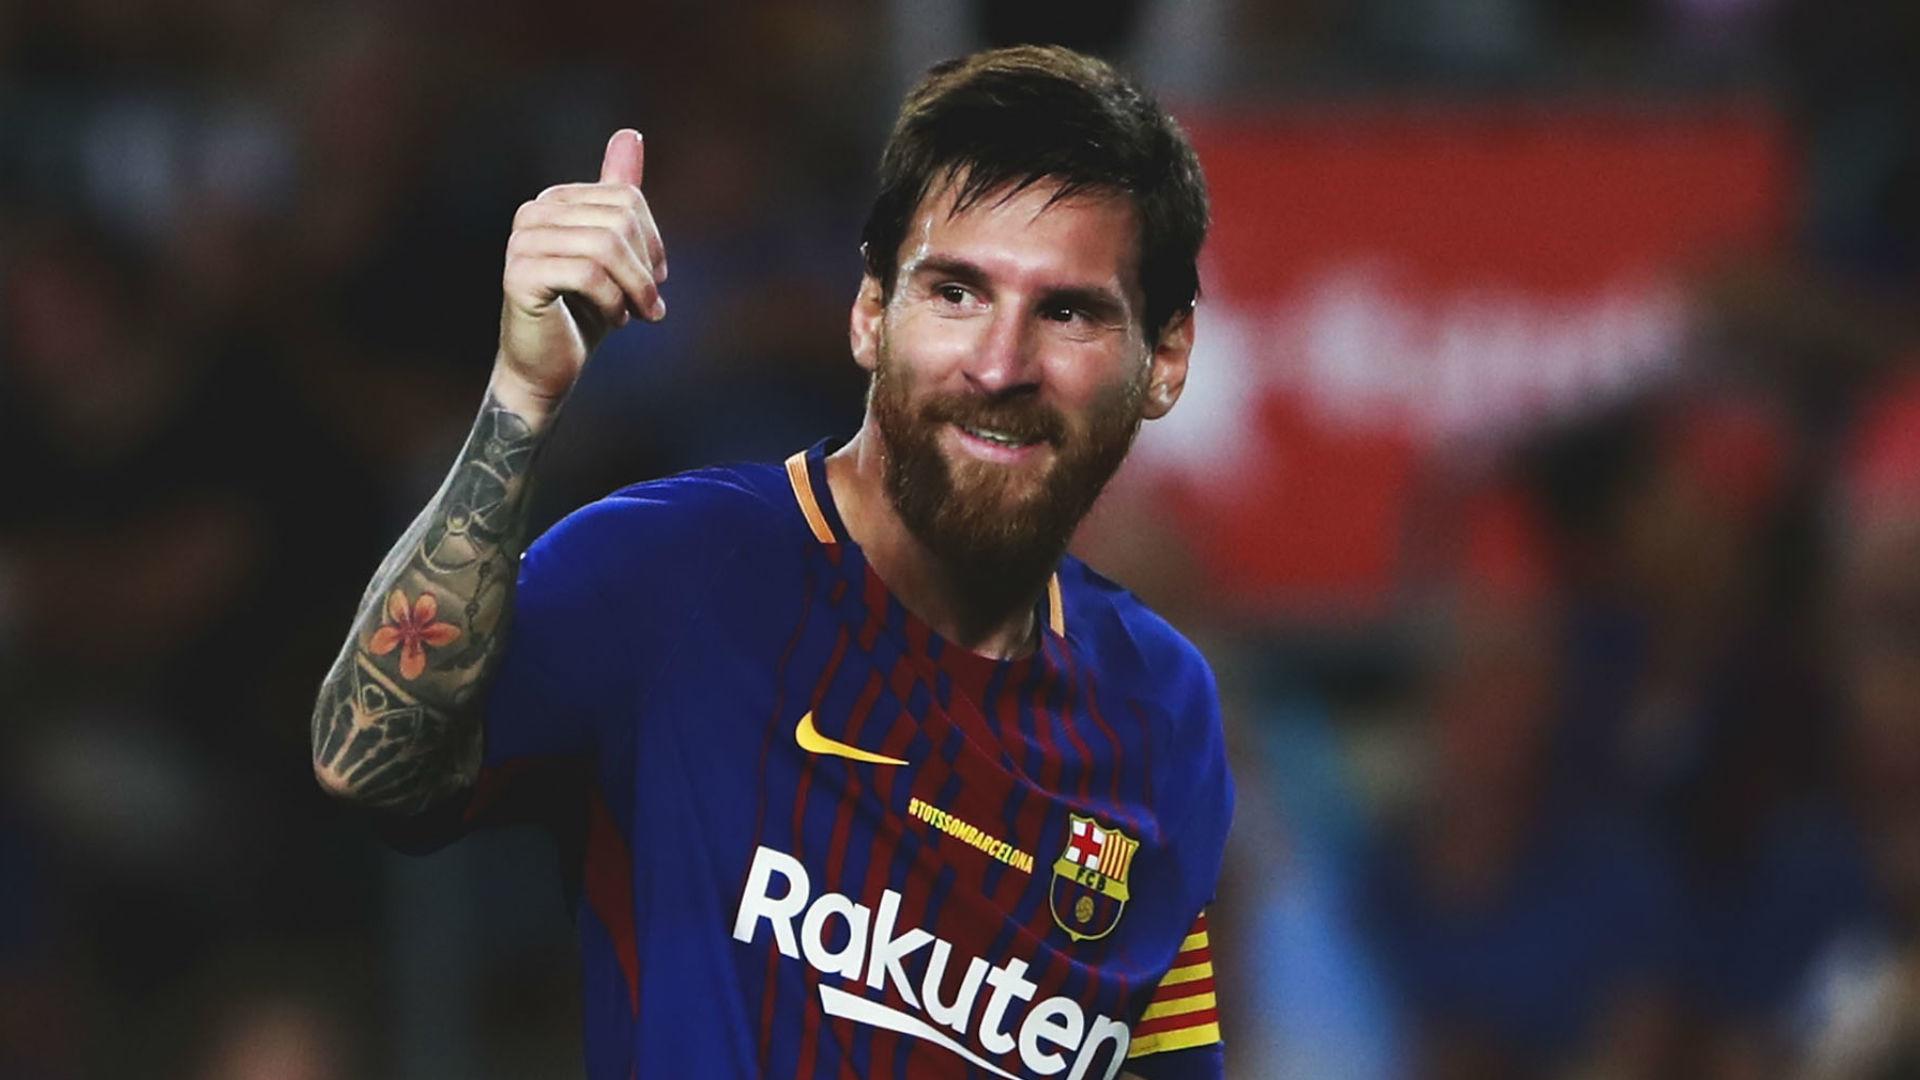 Wallpaper Lionel Messi 2018